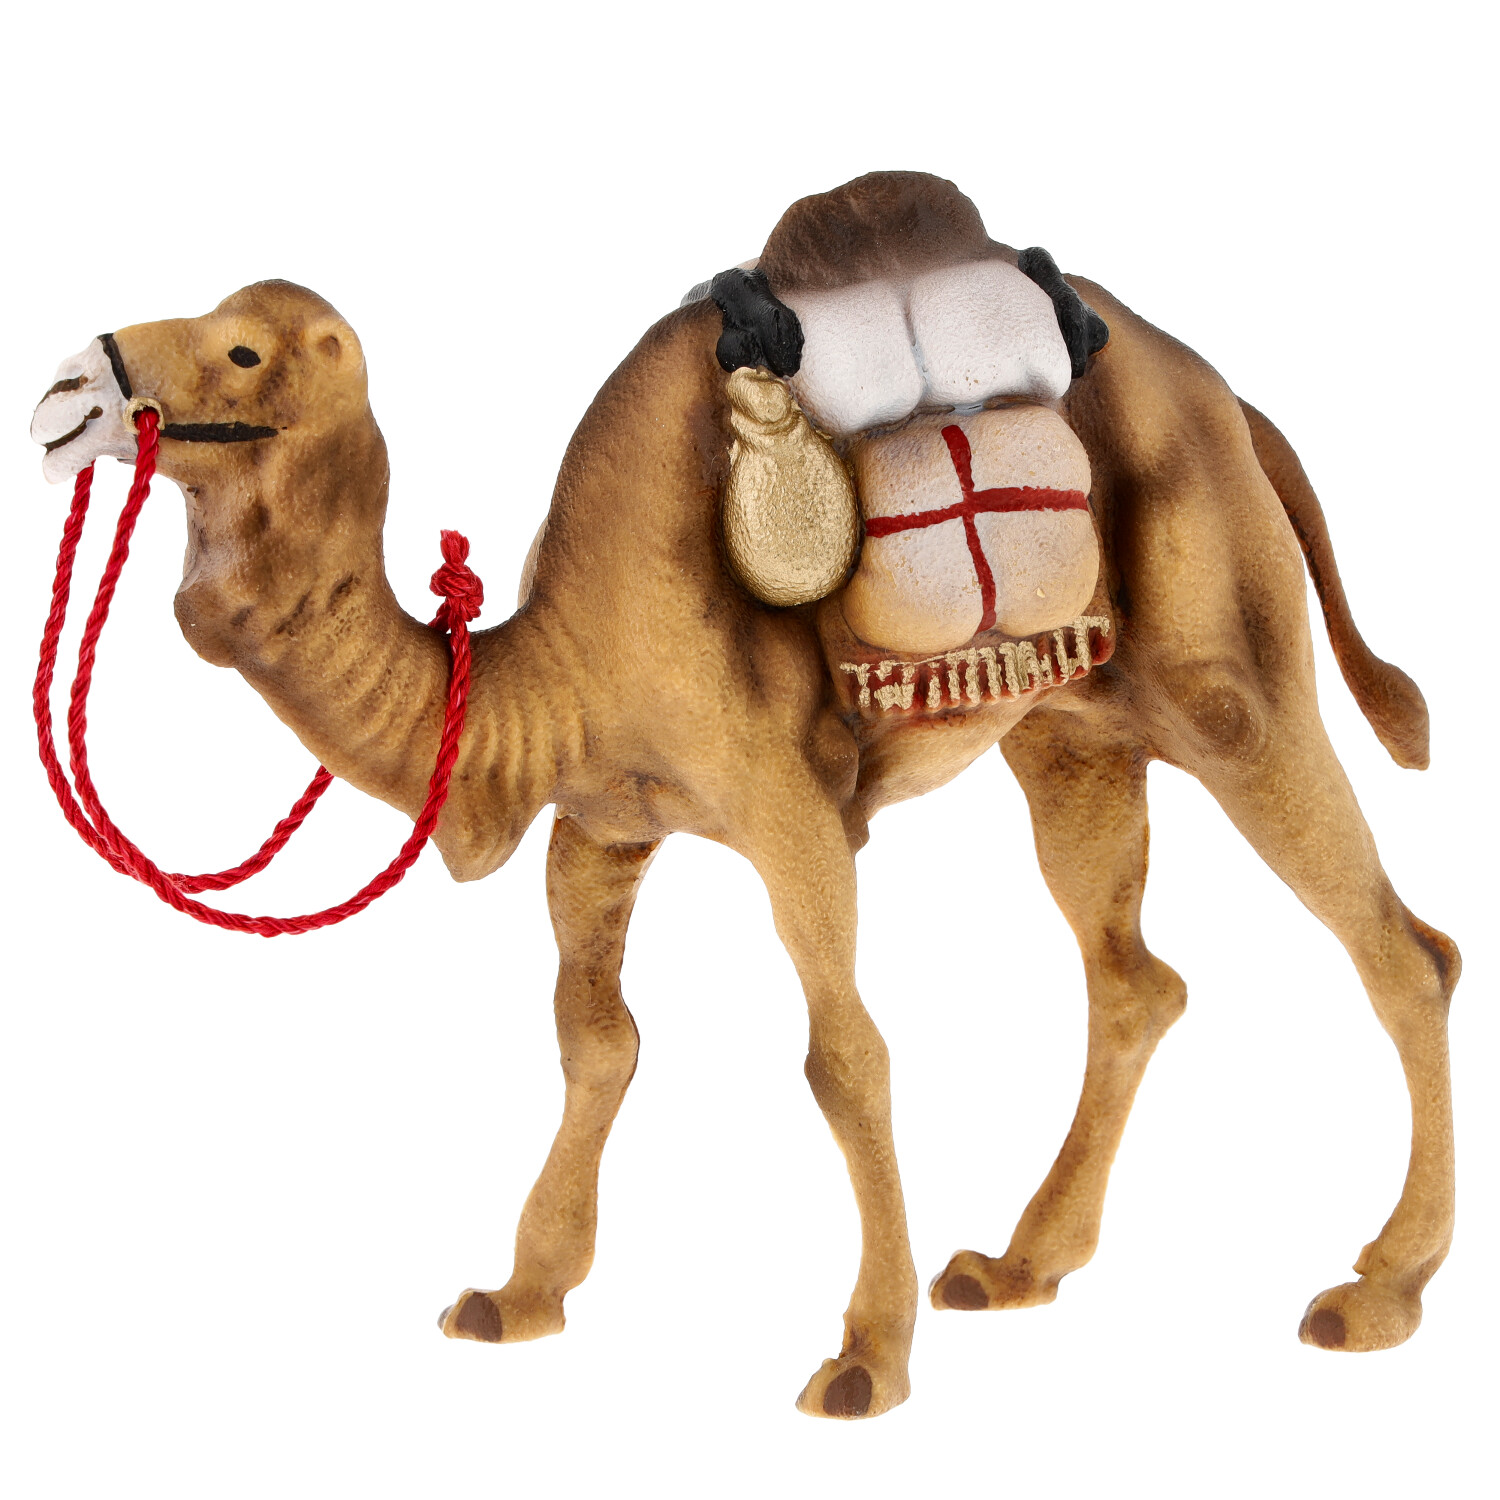 Kamel stehend mit Gepäck, zu 12cm Fig. (Kunststoff) - Marolin Plastik - Krippenfigur aus Kunststoff - made in Germany